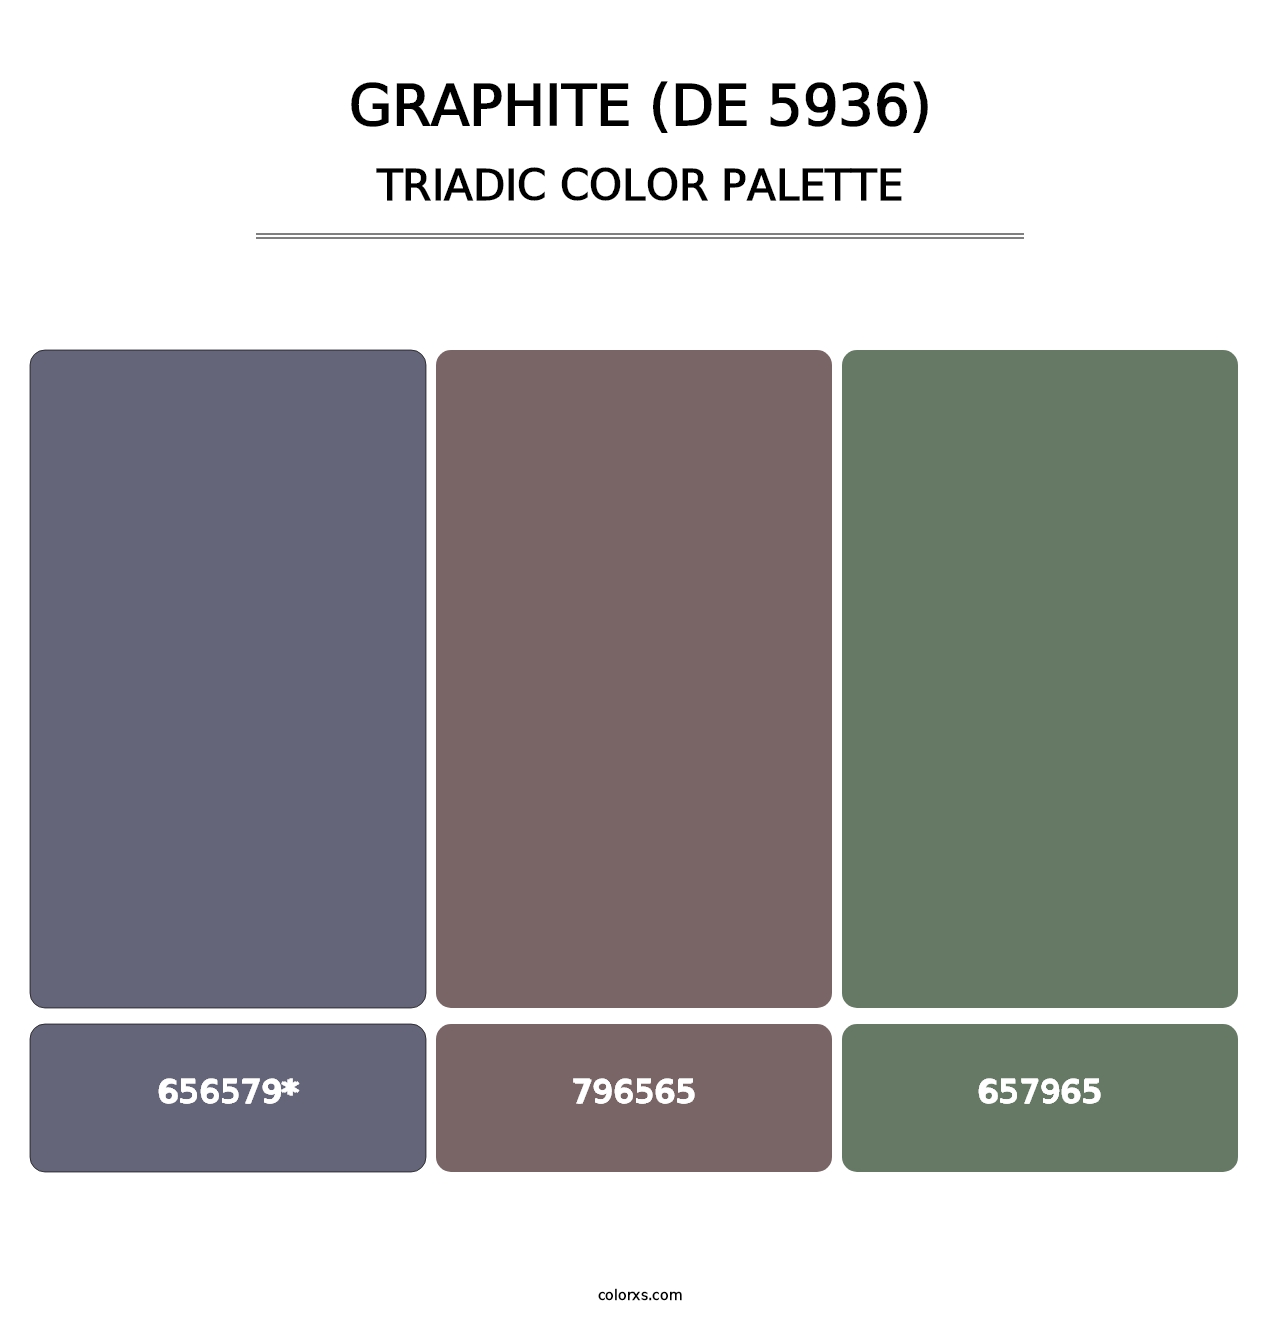 Graphite (DE 5936) - Triadic Color Palette